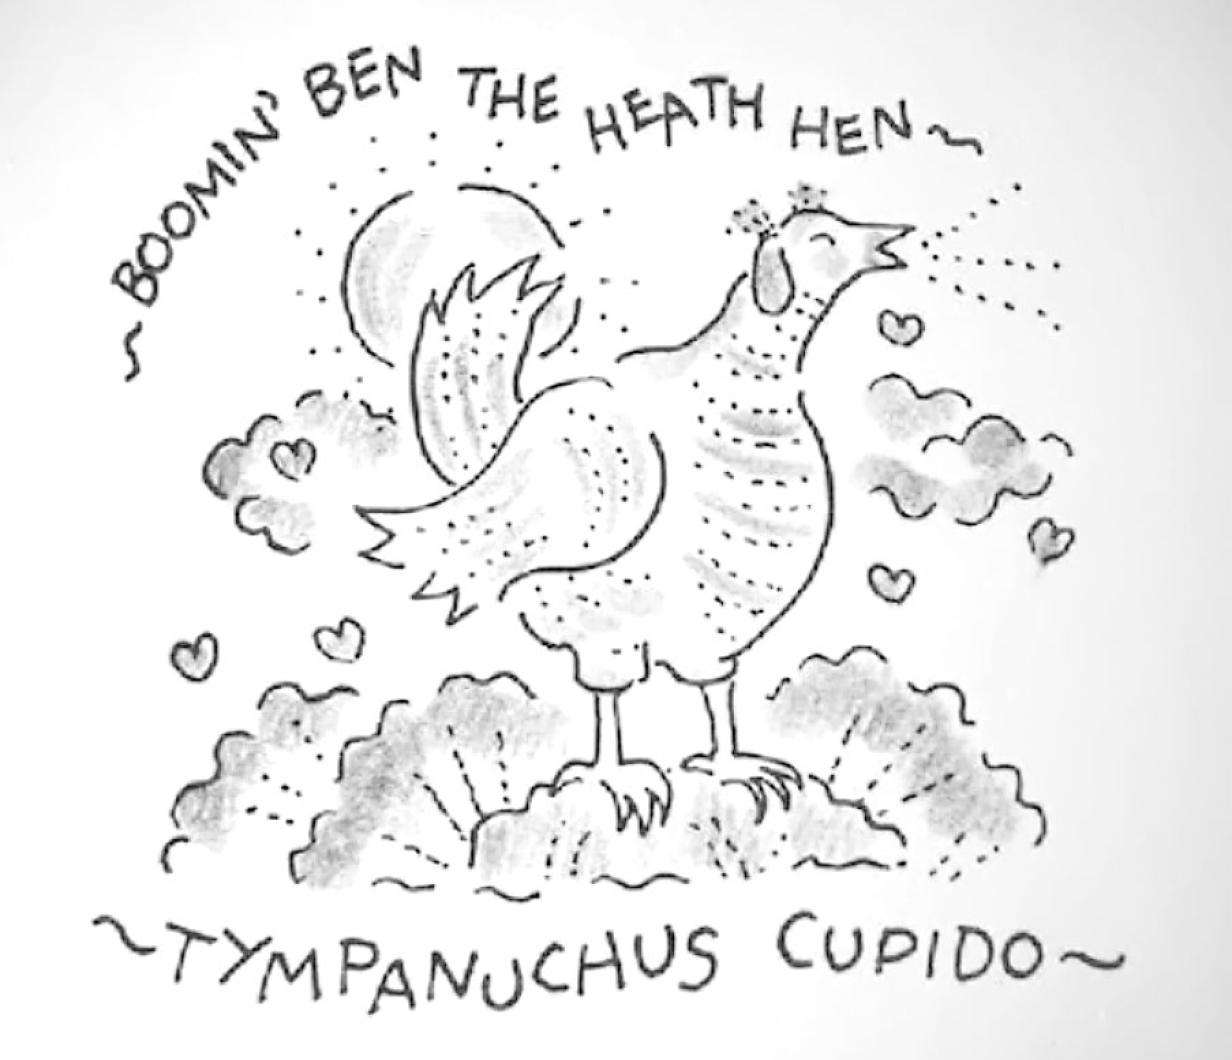 Ben the Heath Hen